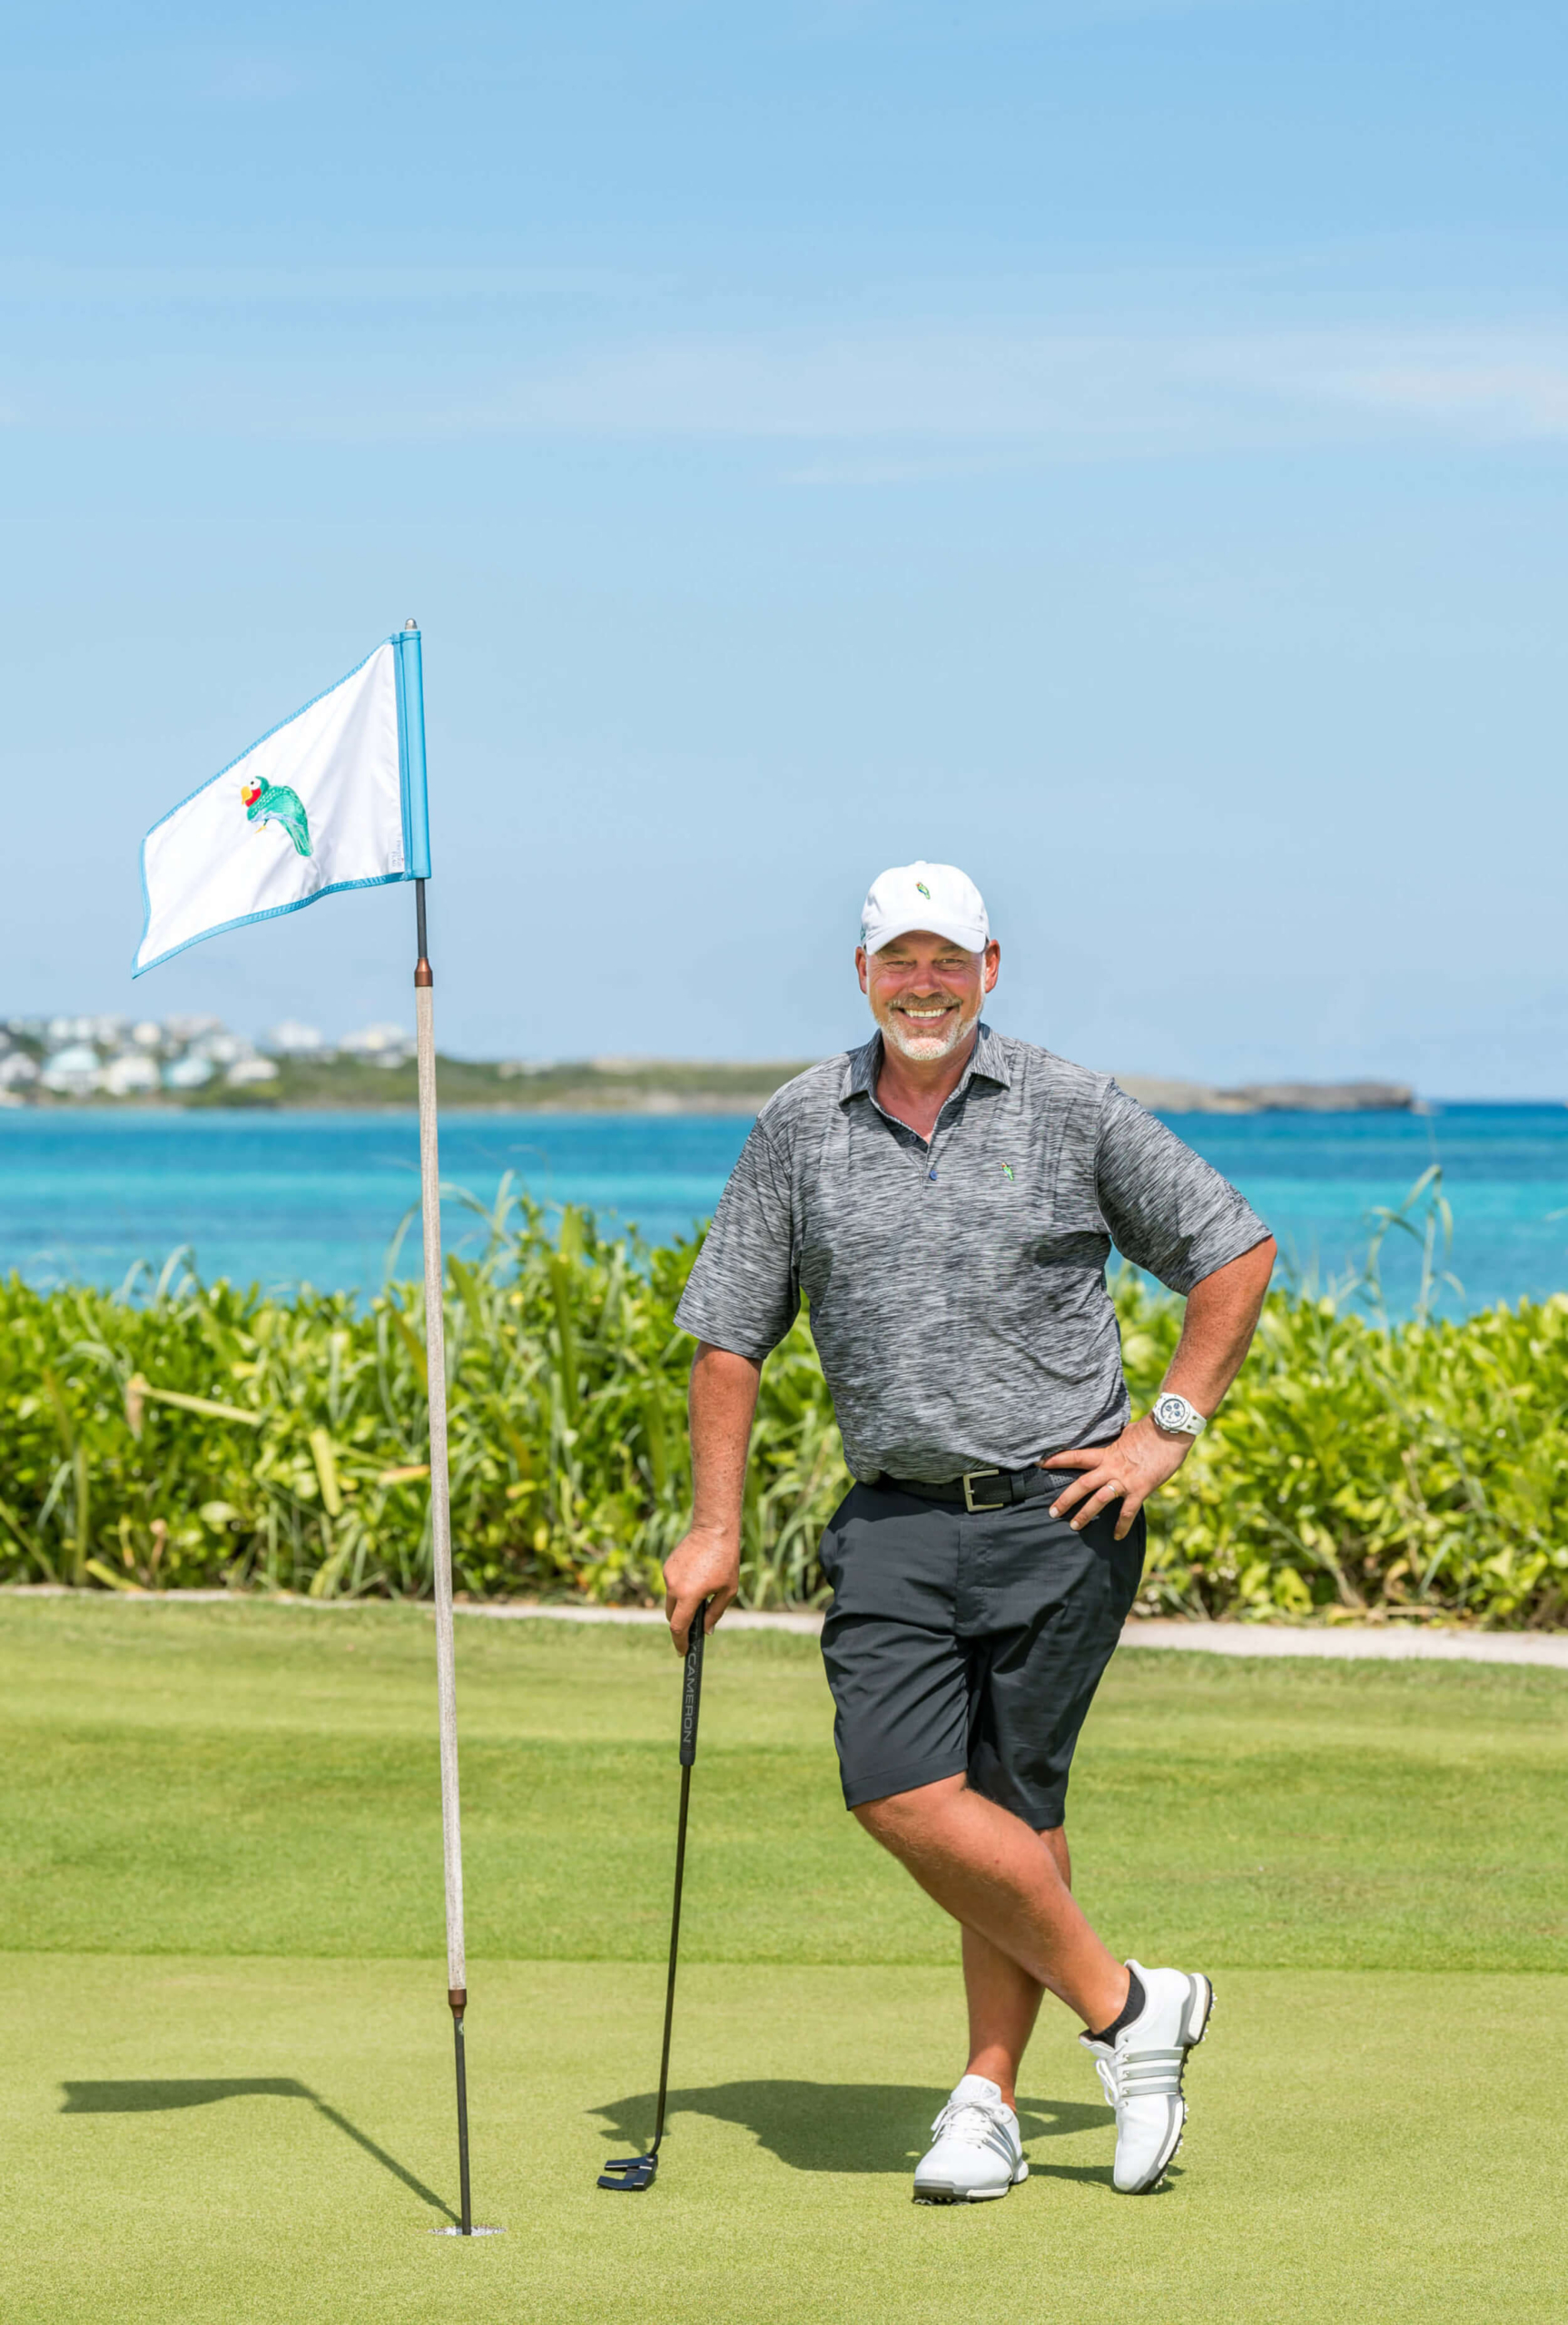 Abaco Club Ambassador and professional golfer Darren Clarke